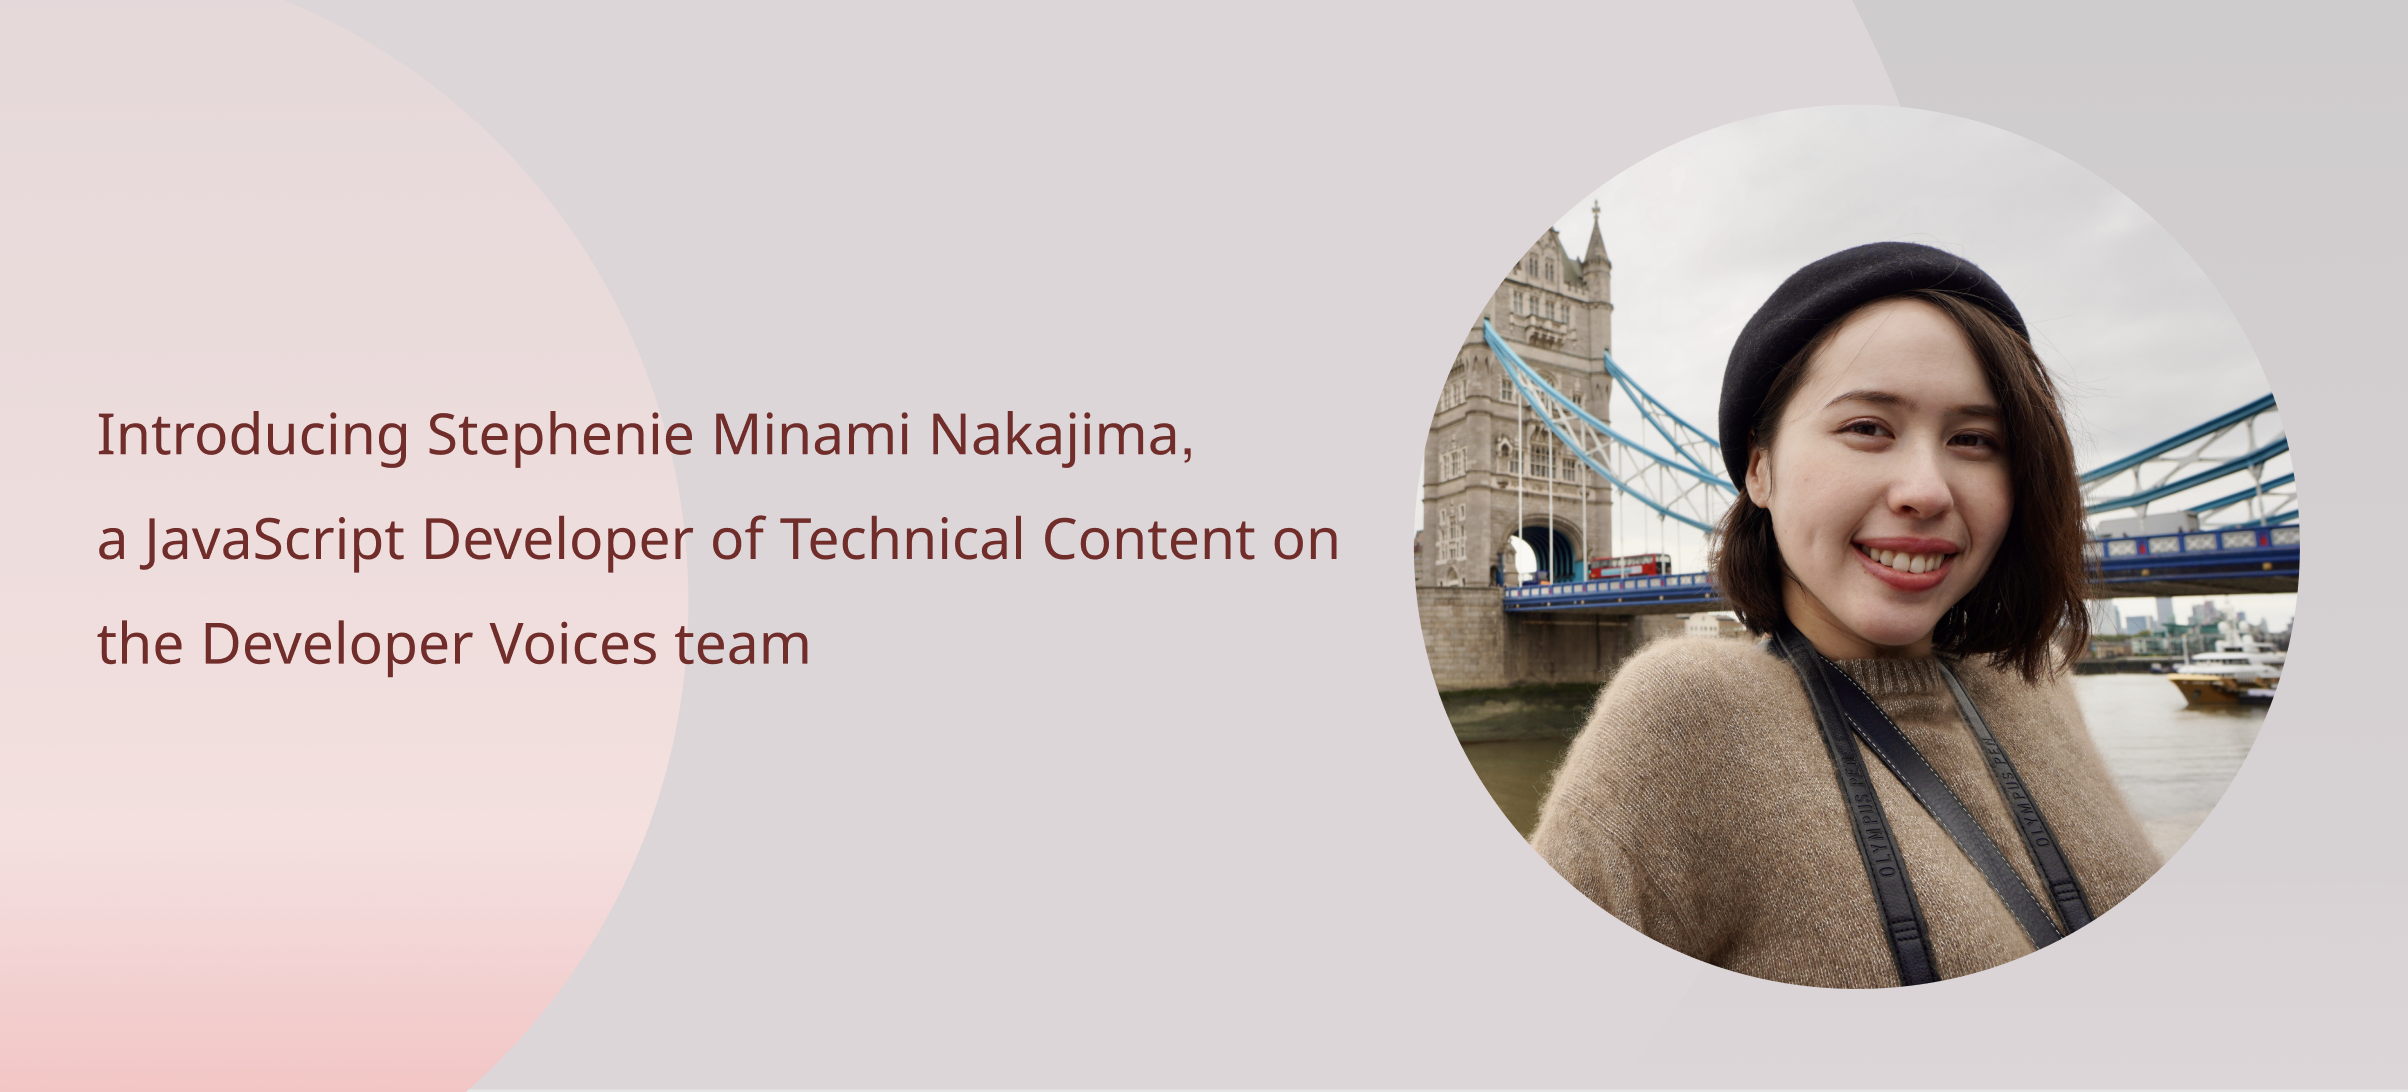 Stephenie Minami Nakajima's introduction post banner image